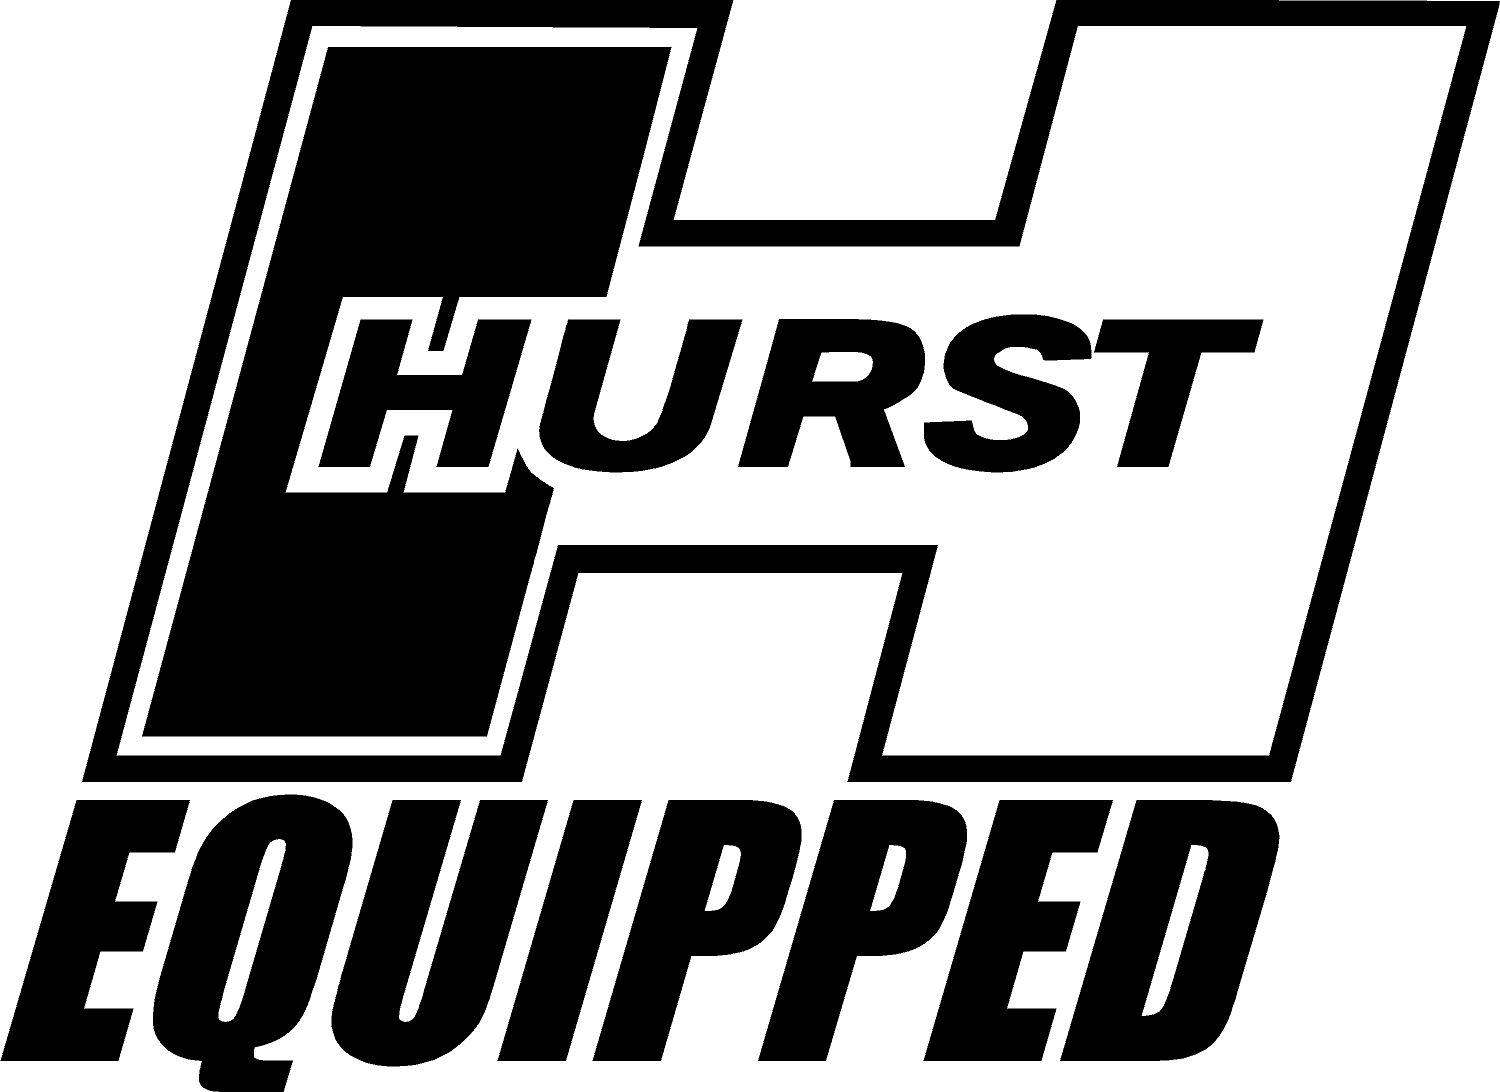 Hurst Logo - Hurst Equipped Decal / Sticker 05